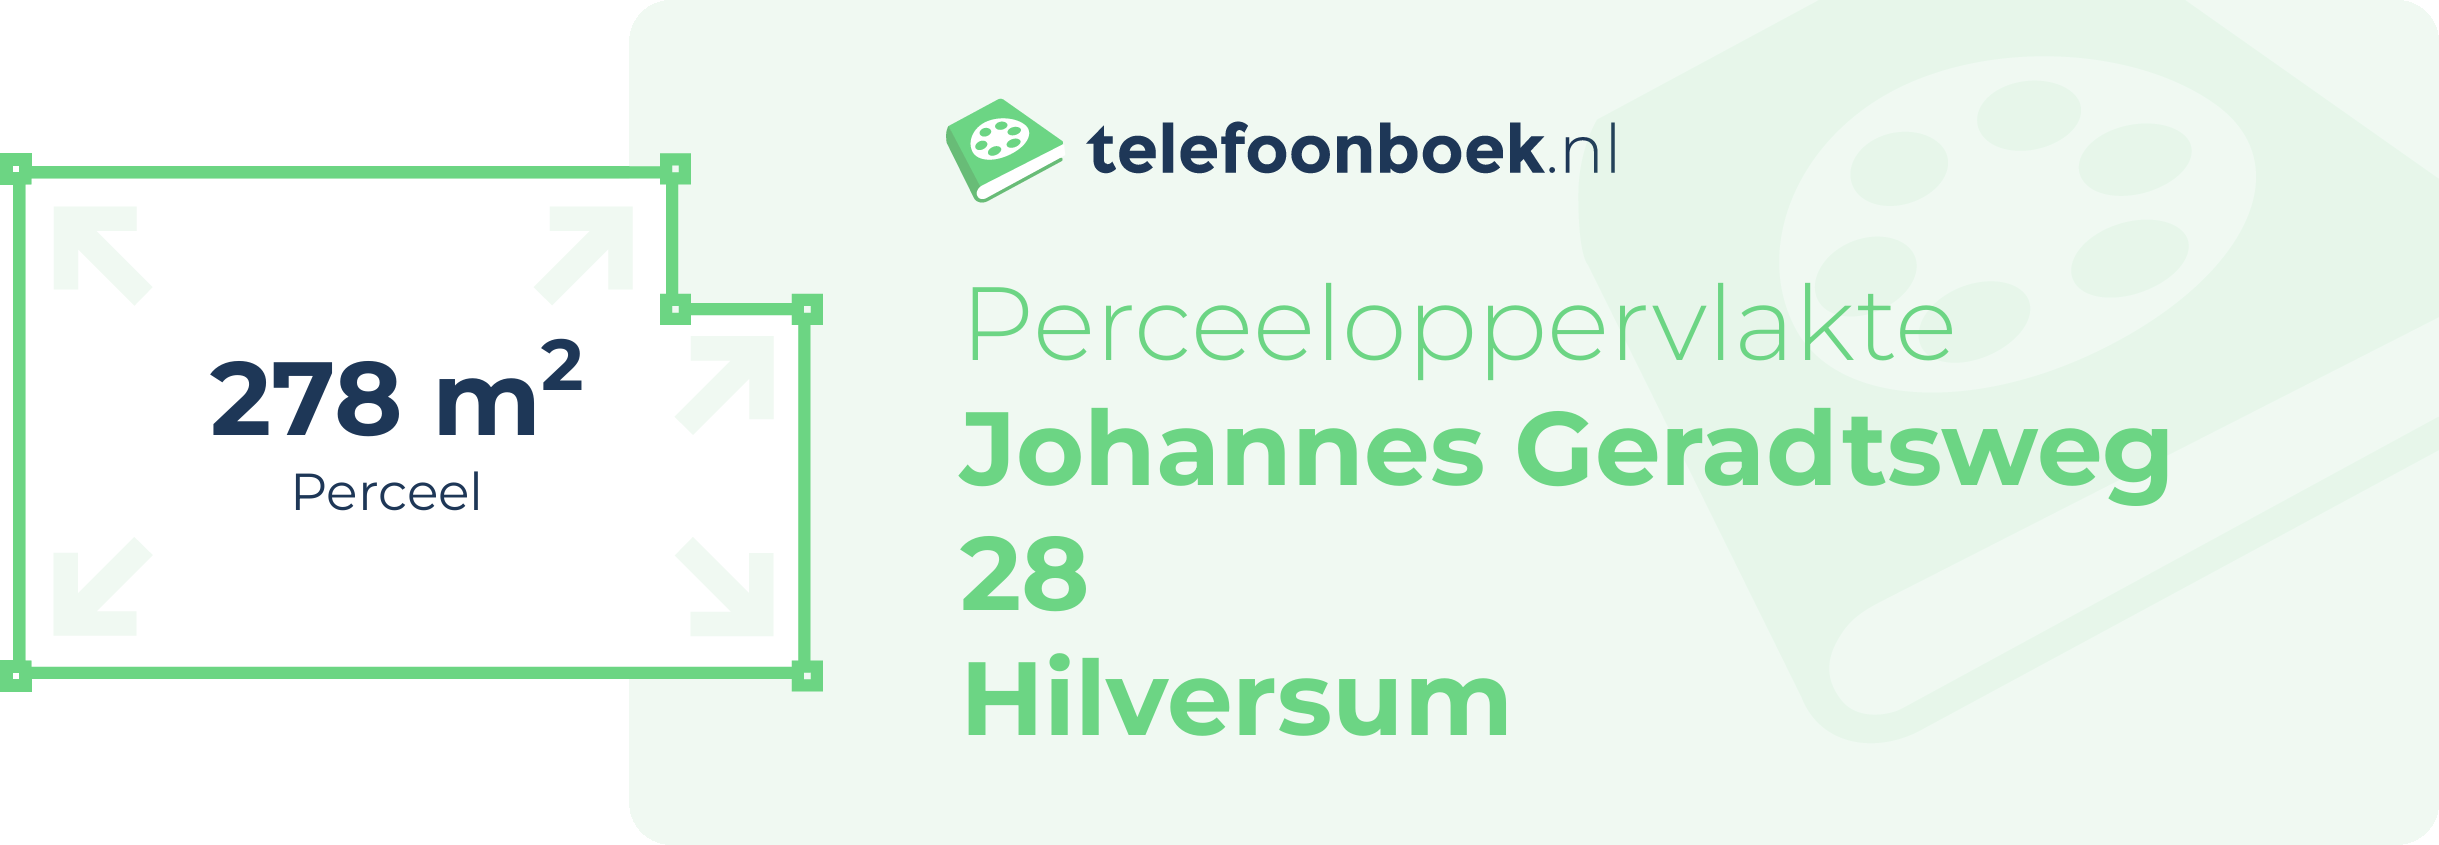 Perceeloppervlakte Johannes Geradtsweg 28 Hilversum